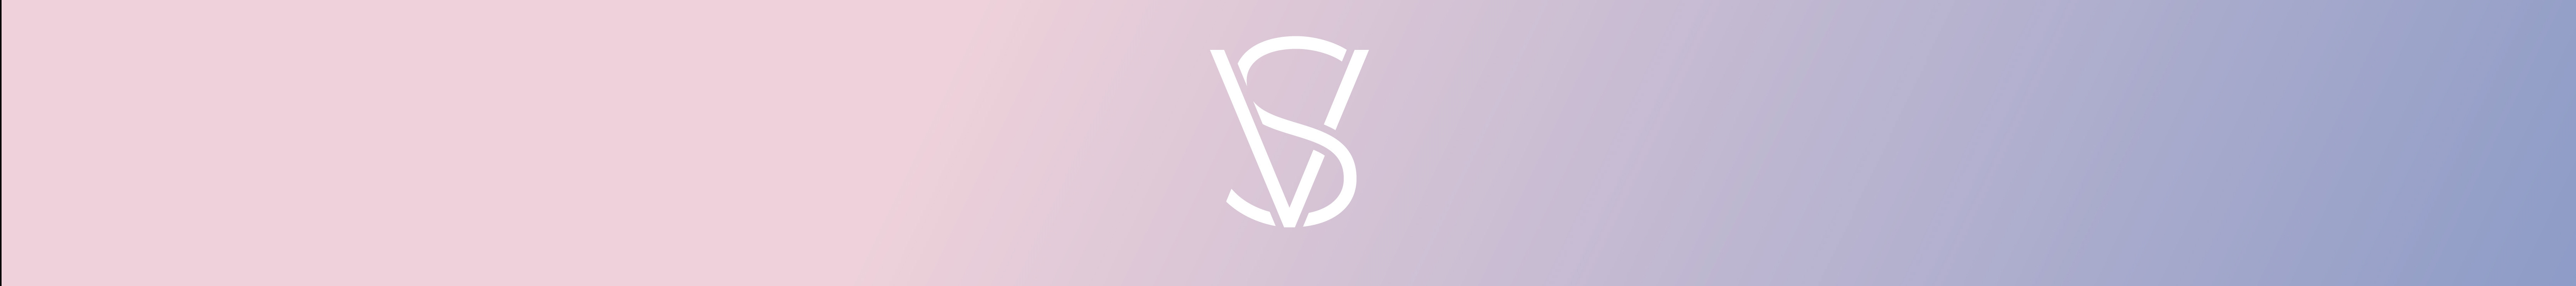 Velove Shieffa's profile banner